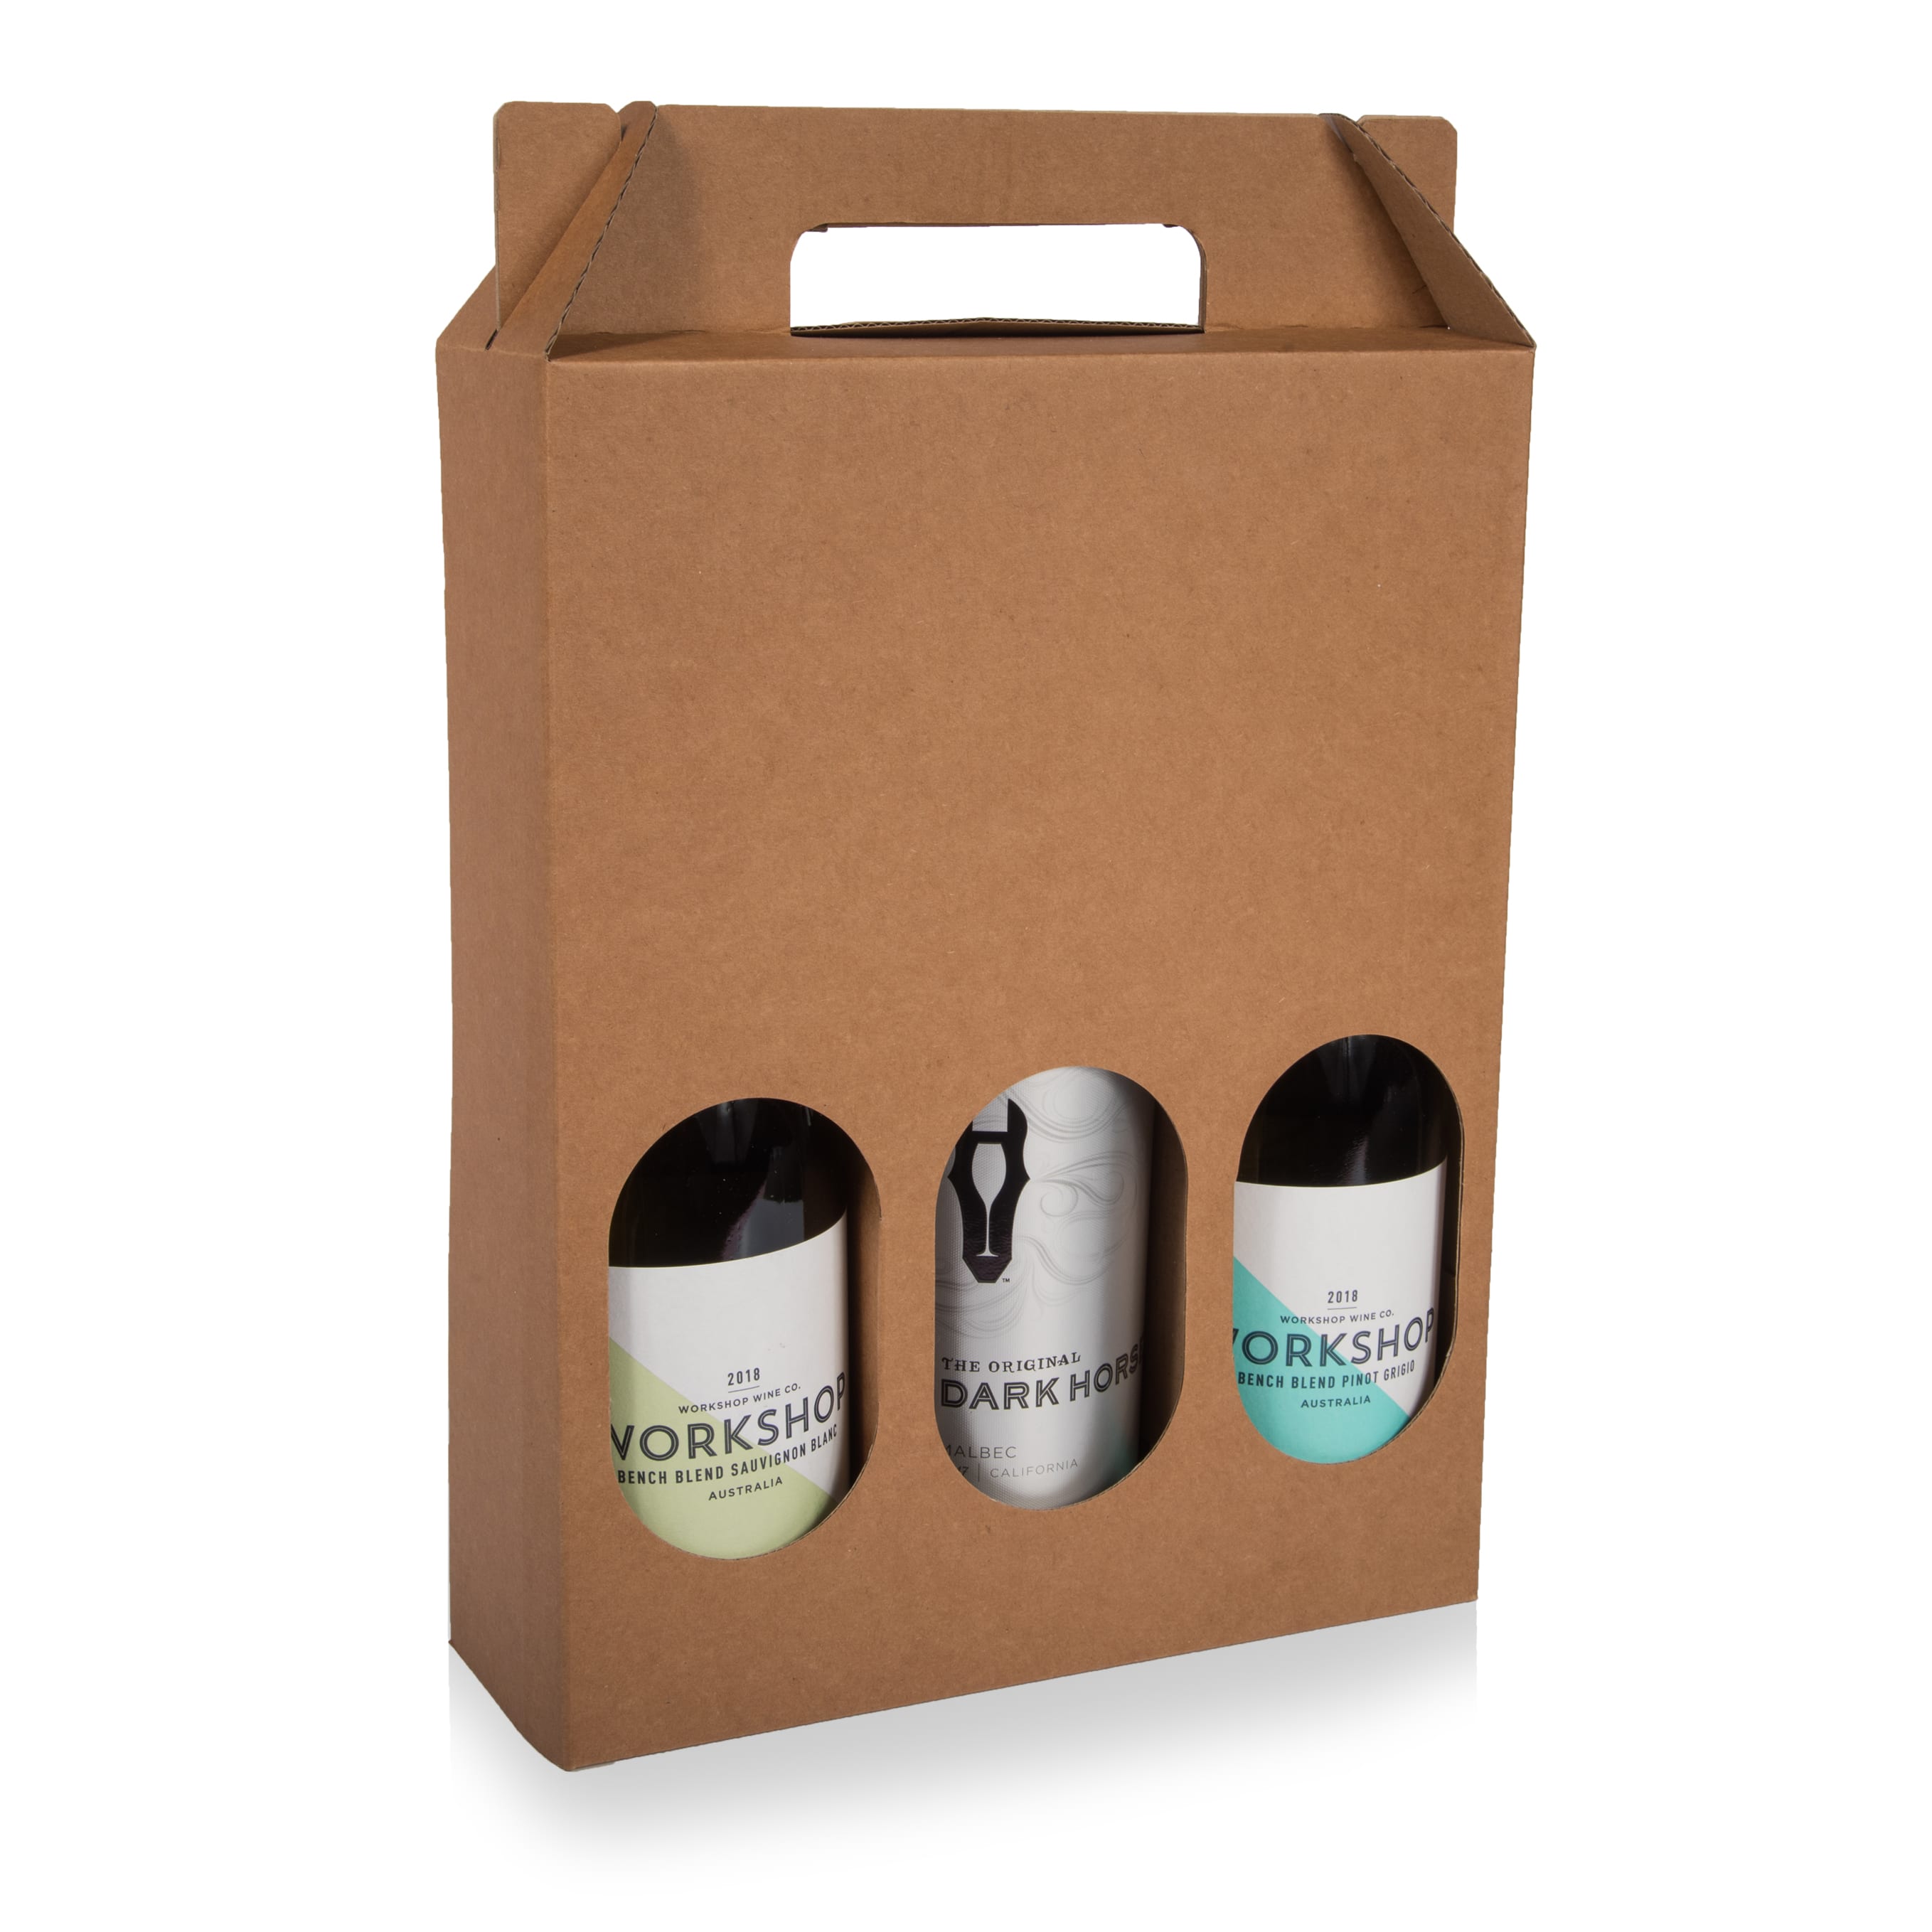 3 Bottle Beer / Cider / Wine Bottle Gift Box - Packaging for Retail - UK